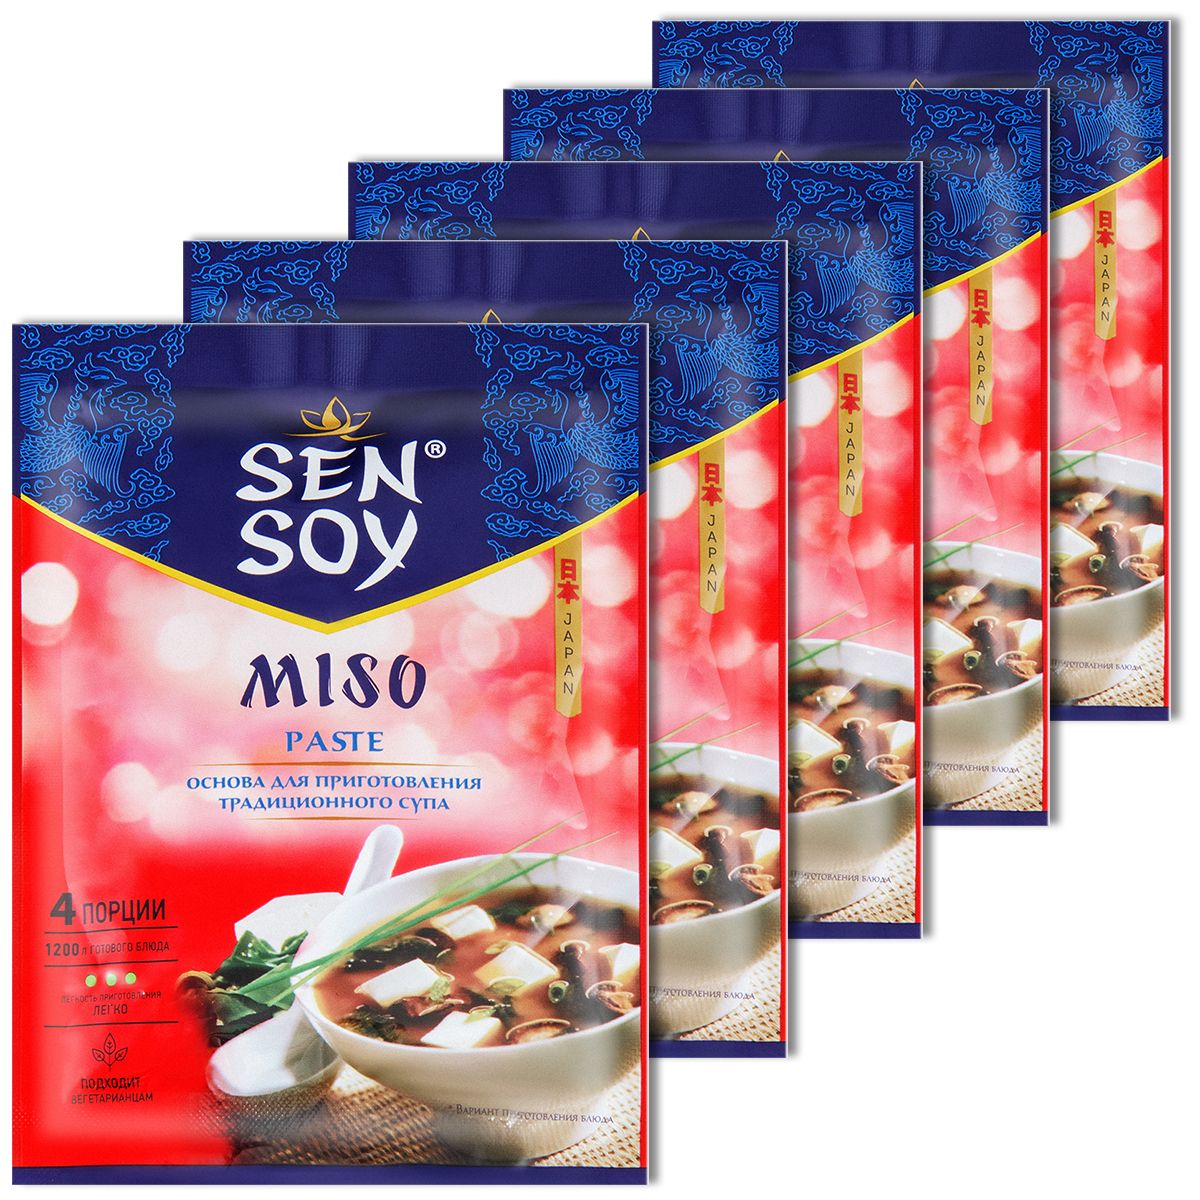 SenSoyосновадлясупамисо"MISO",пакет80г,5шт.